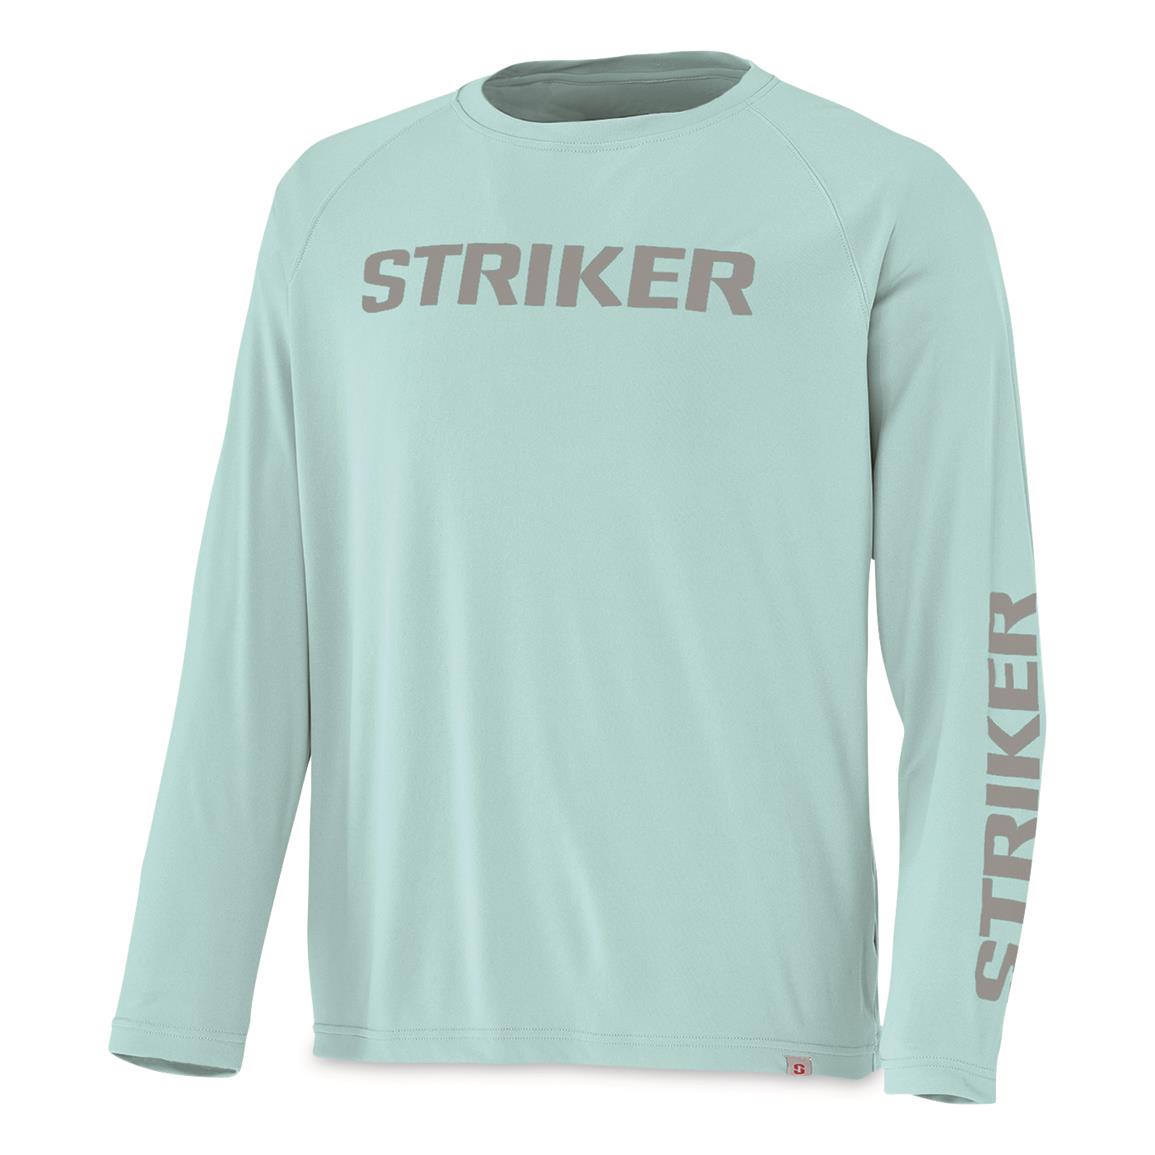 Striker Men's Swagger UPF Long Sleeve Shirt, Glacier